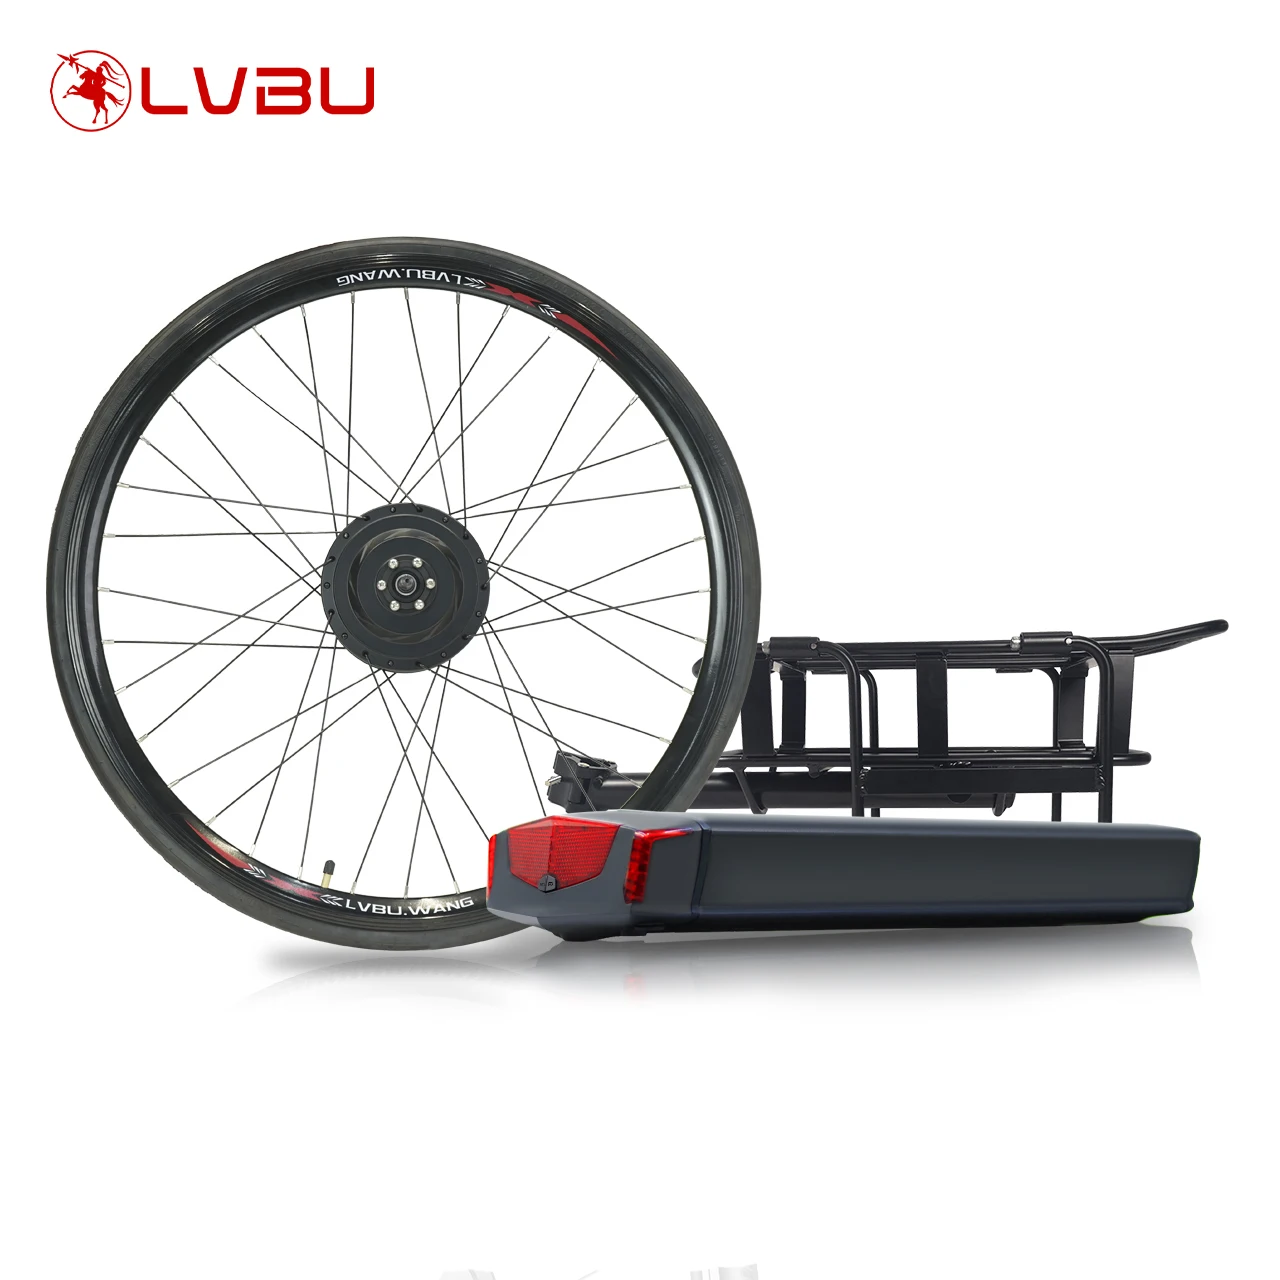 

lvbu front rear hidden power mid drive electric bike conversion kit for electric mountain bike conversion kit 27.5 inch wheel